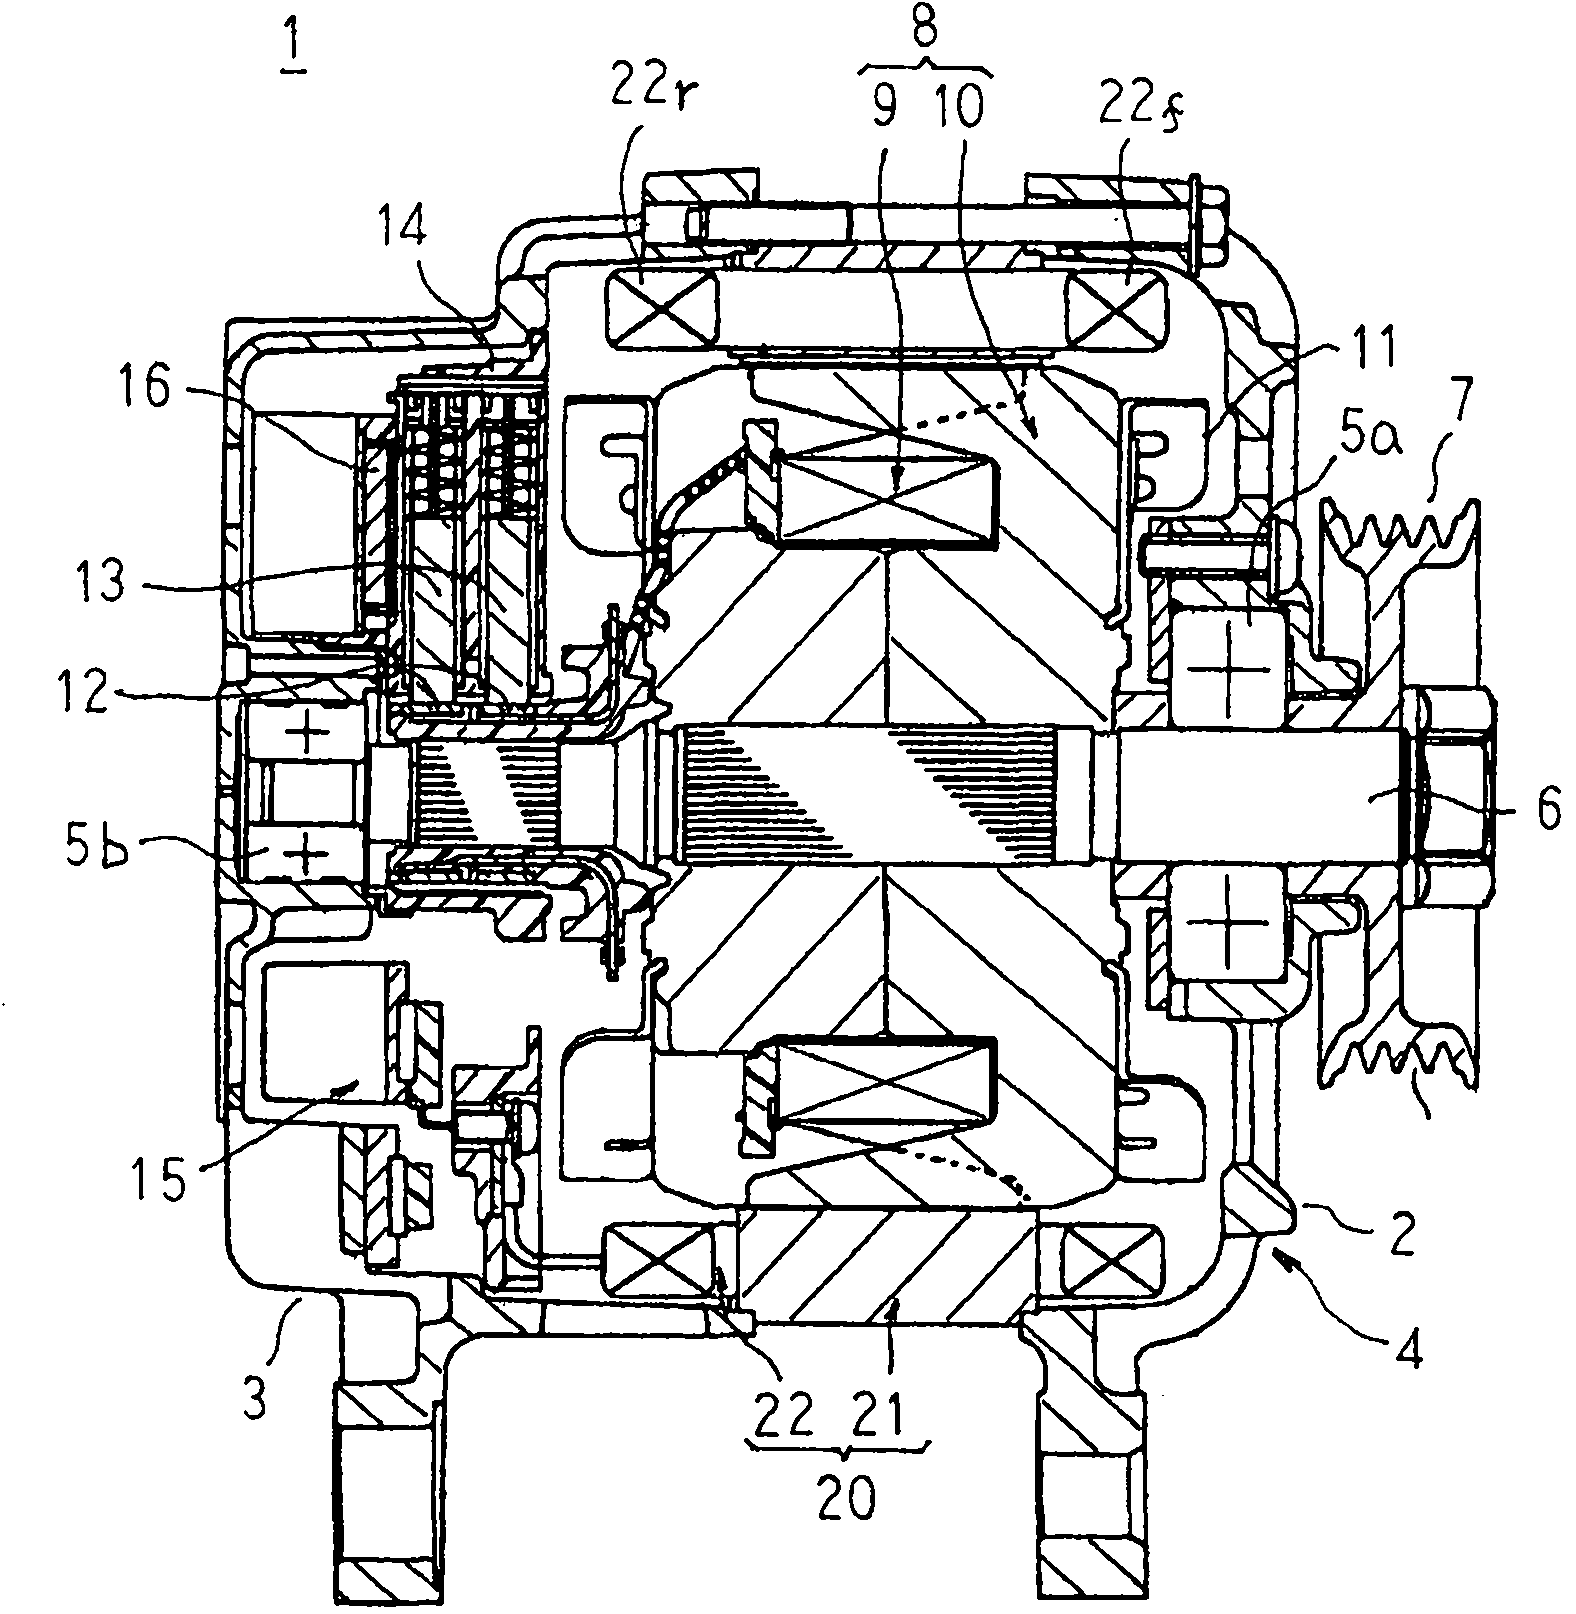 Vehicle rotating motor